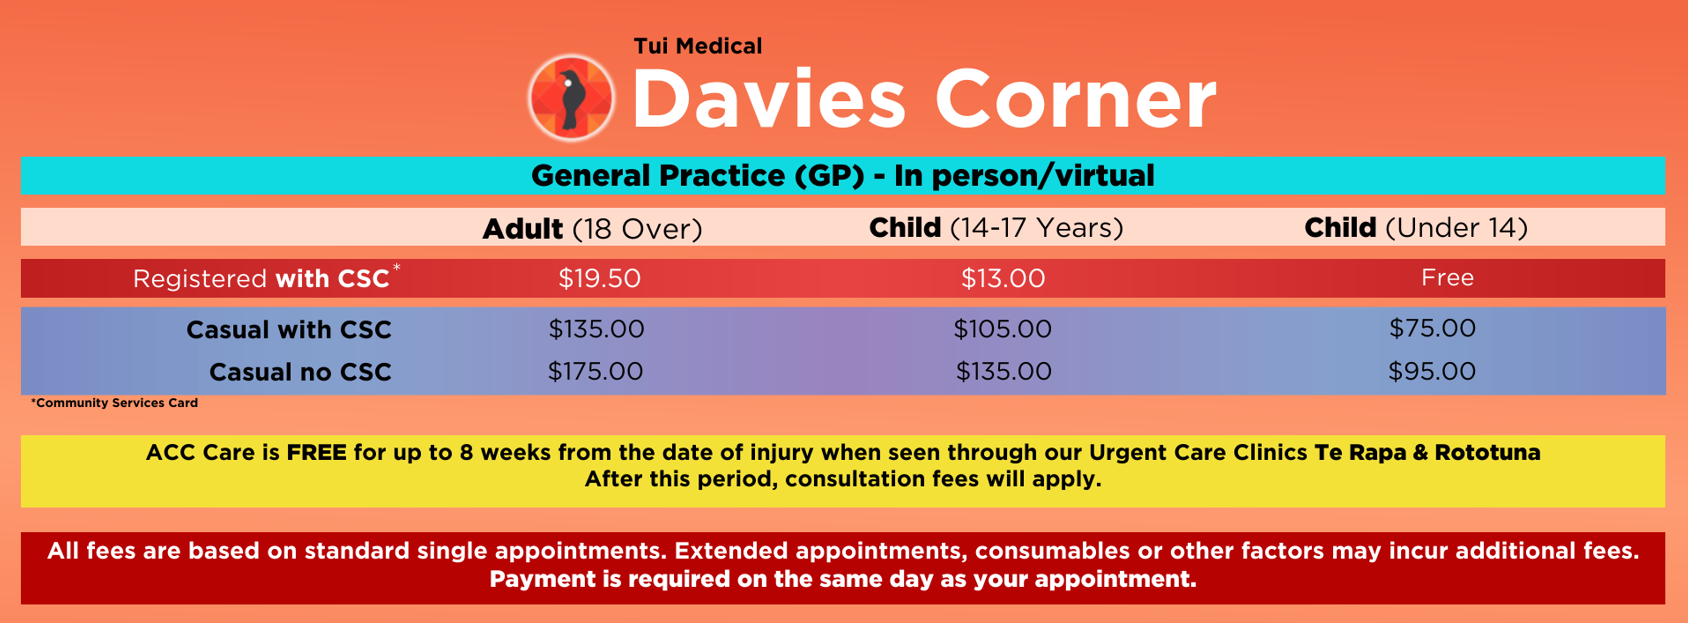 Davies Corner fees